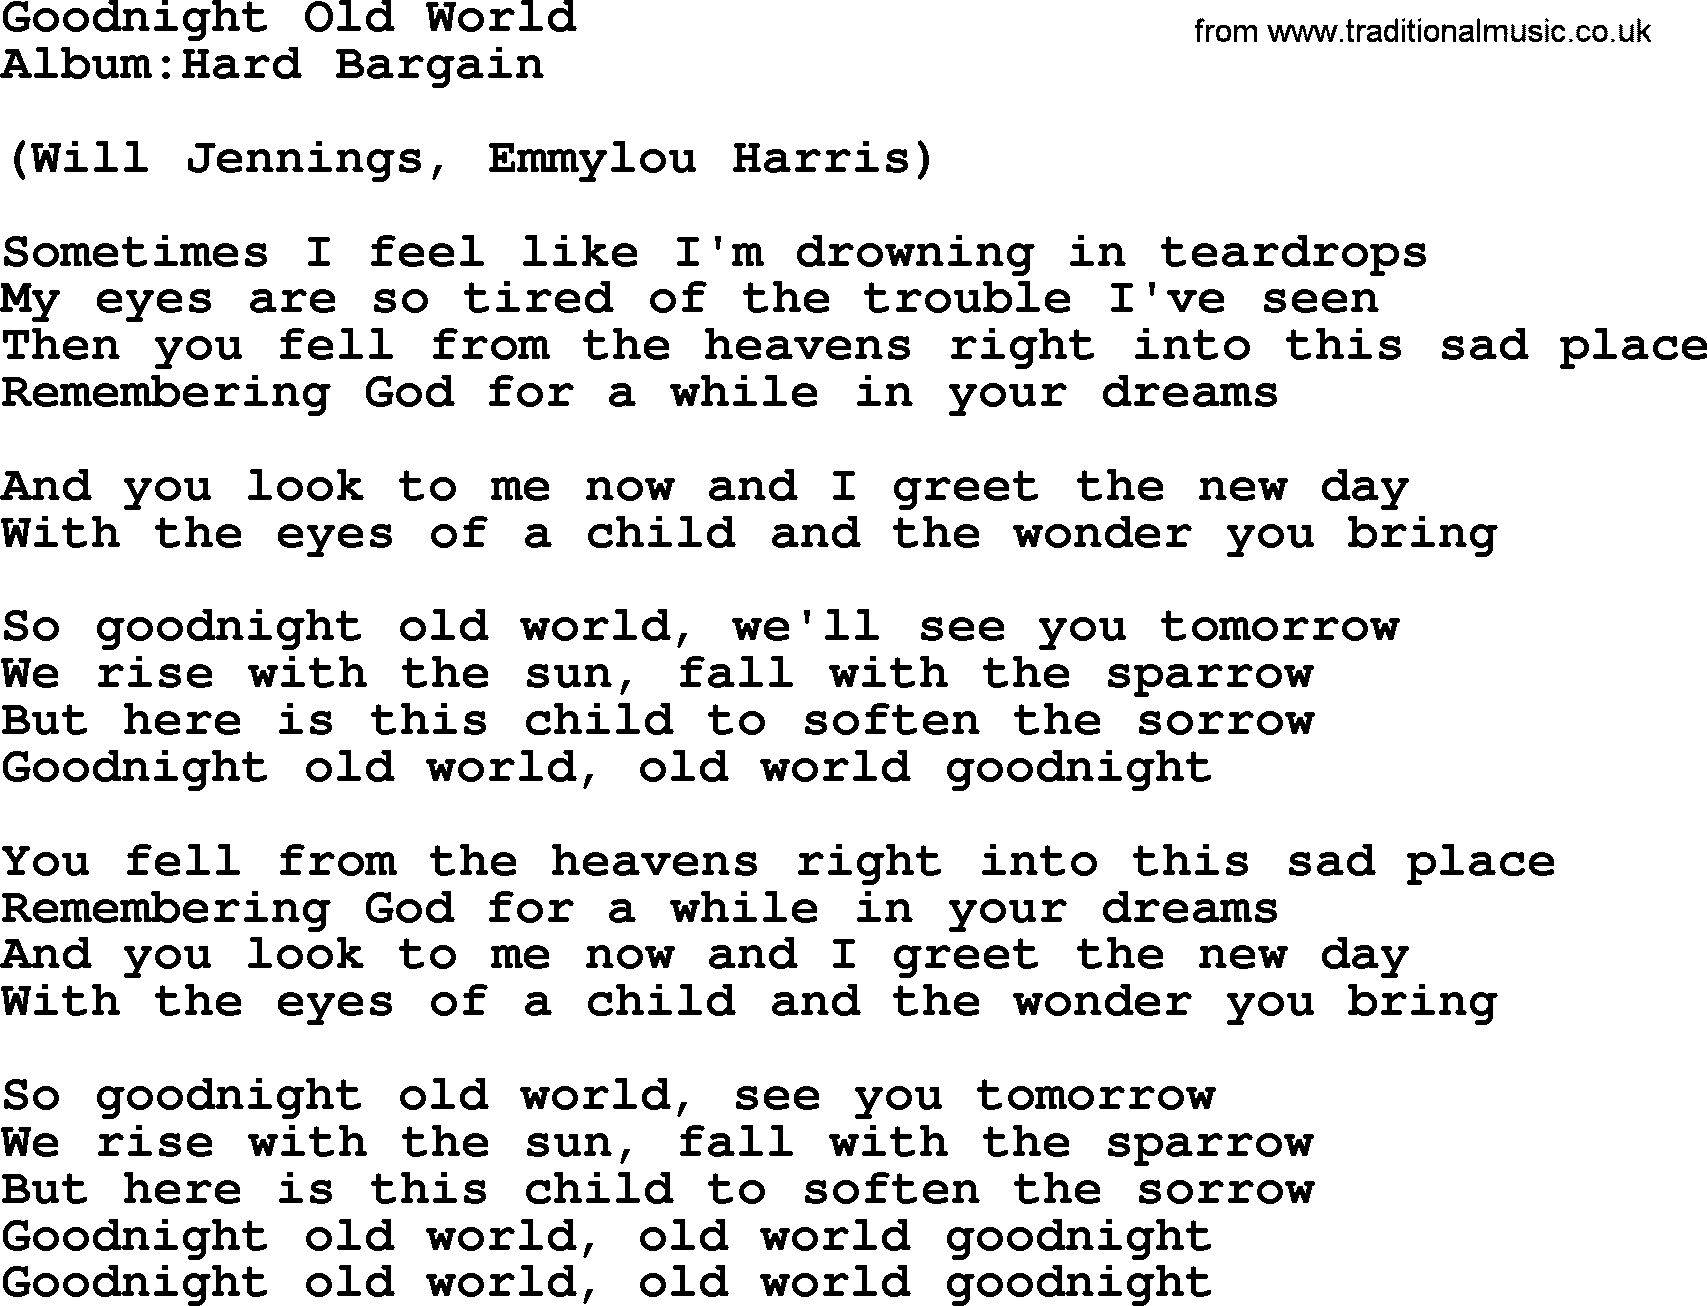 Emmylou Harris song: Goodnight Old World lyrics